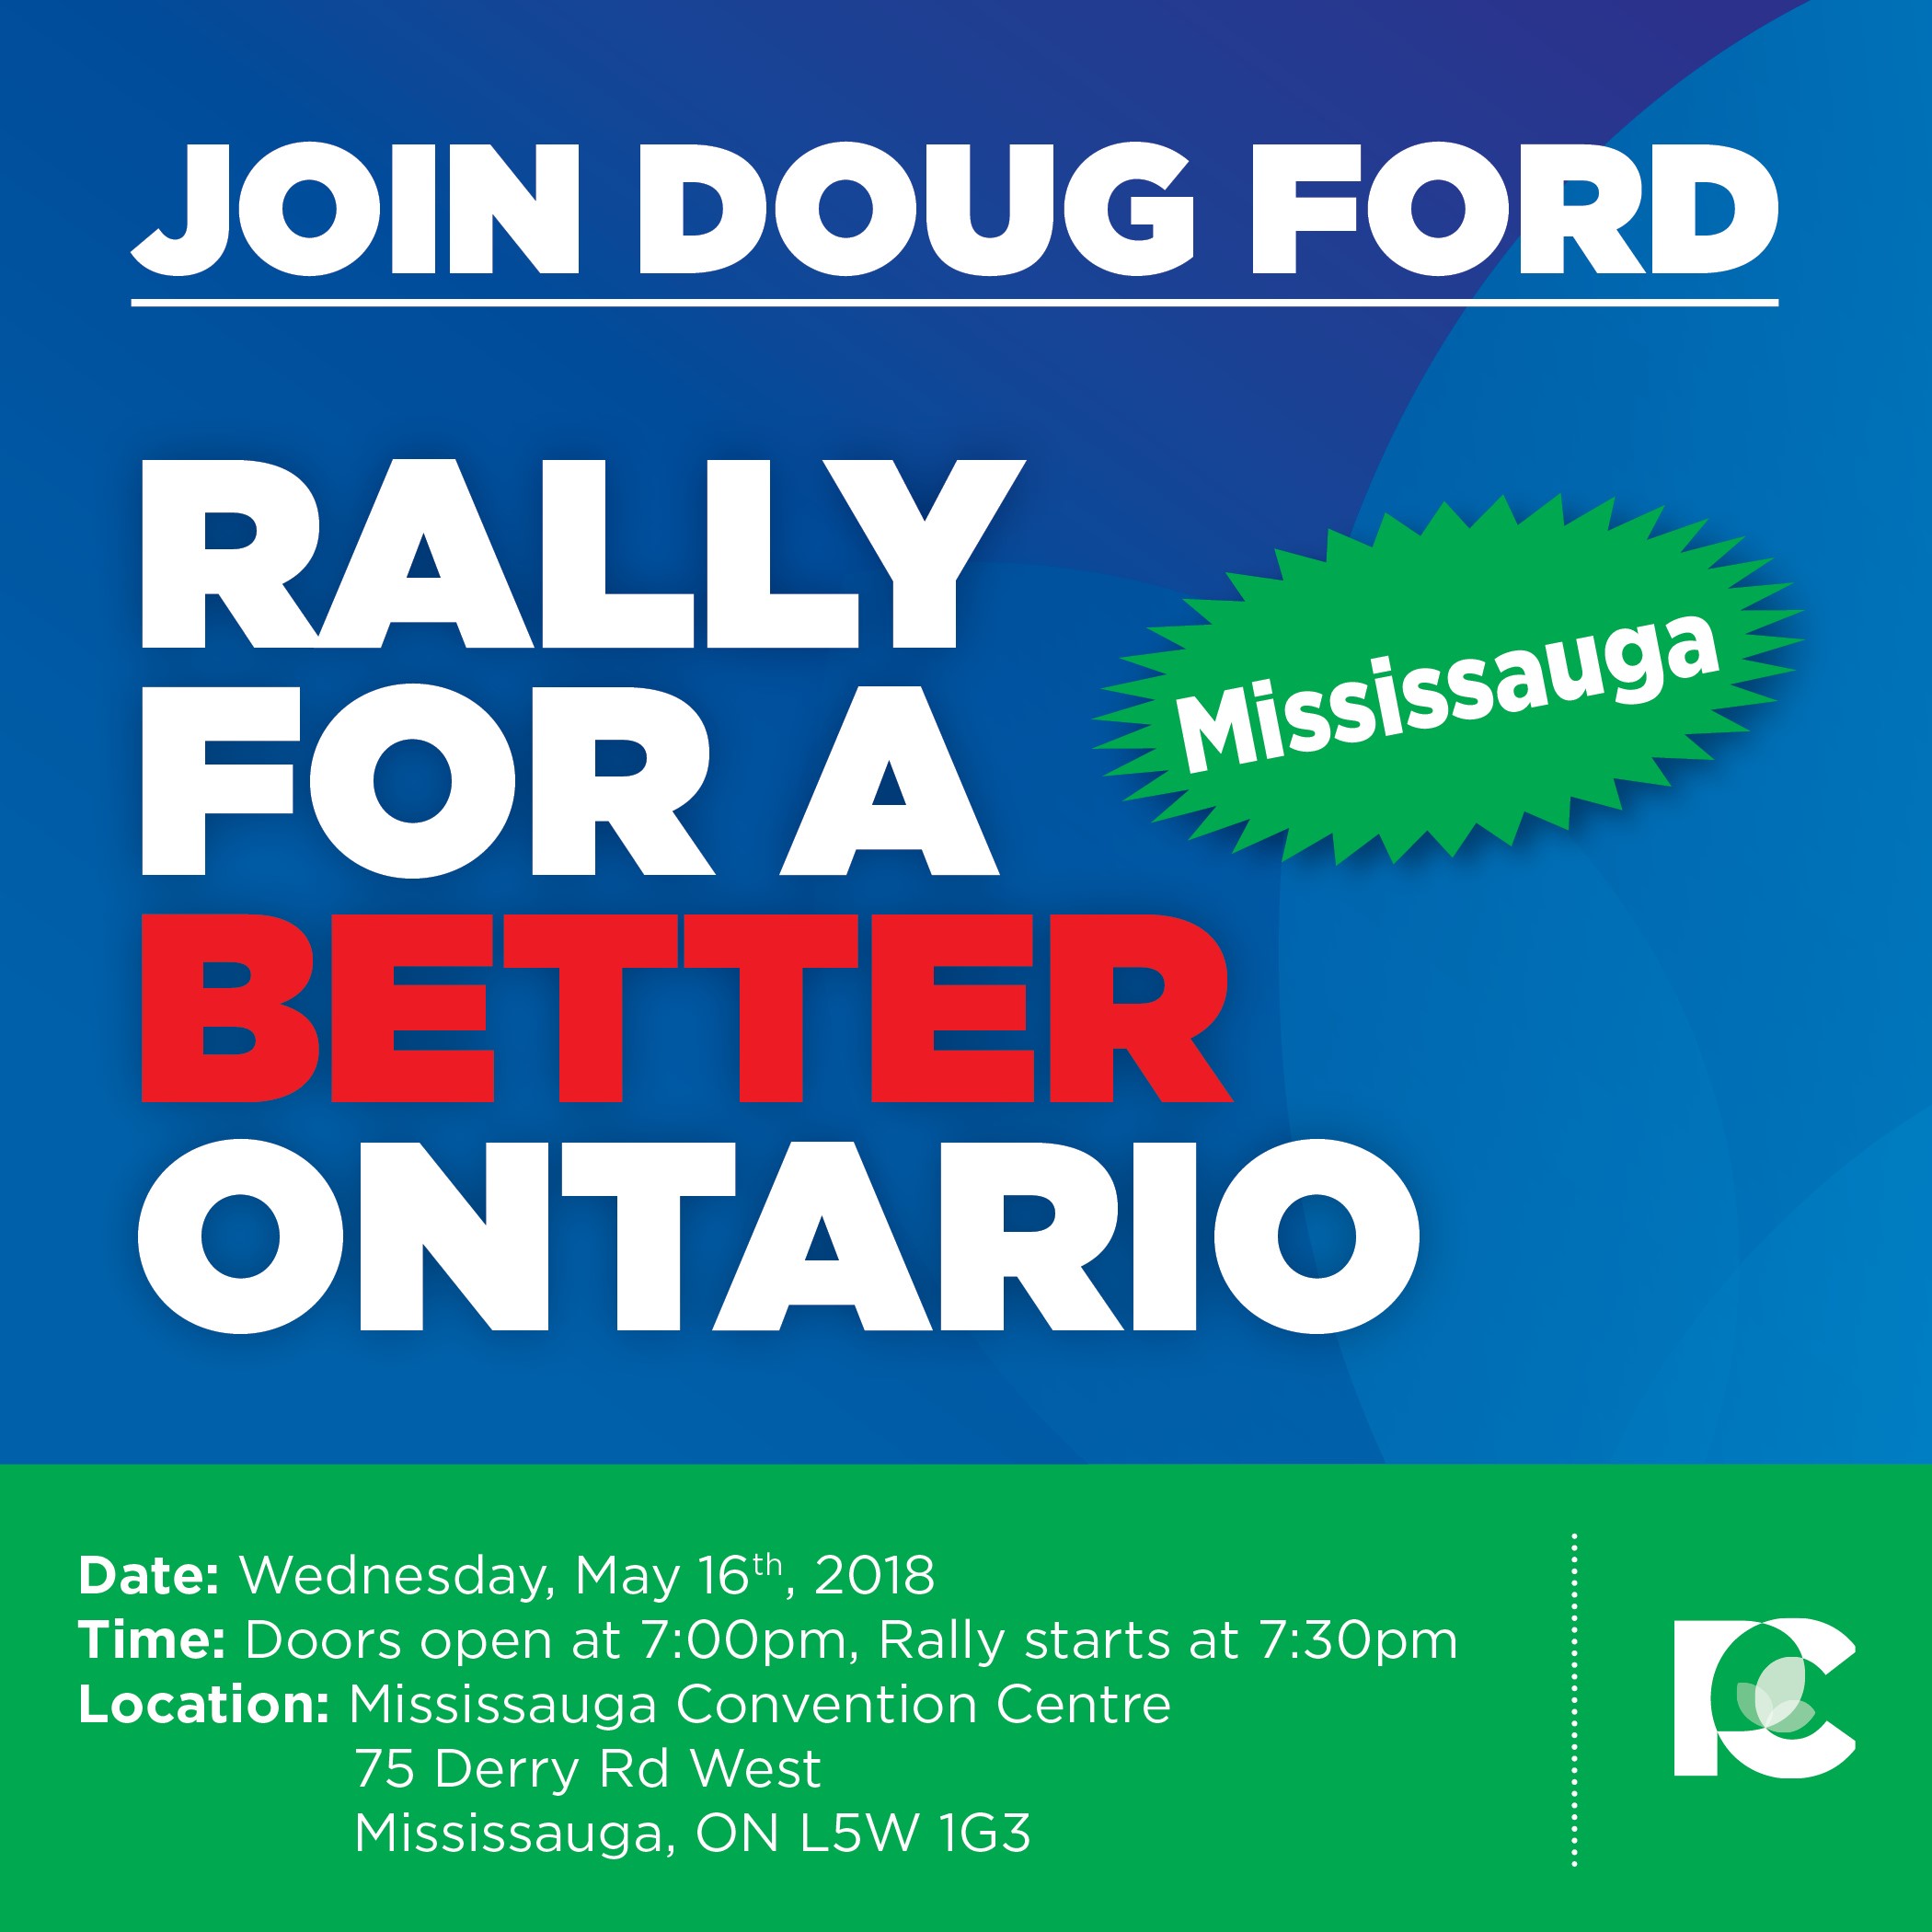 Doug Ford Rally for a Better Ontario Google image from https://www.ontariopc.ca/rally_for_a_better_ontario_mississauga